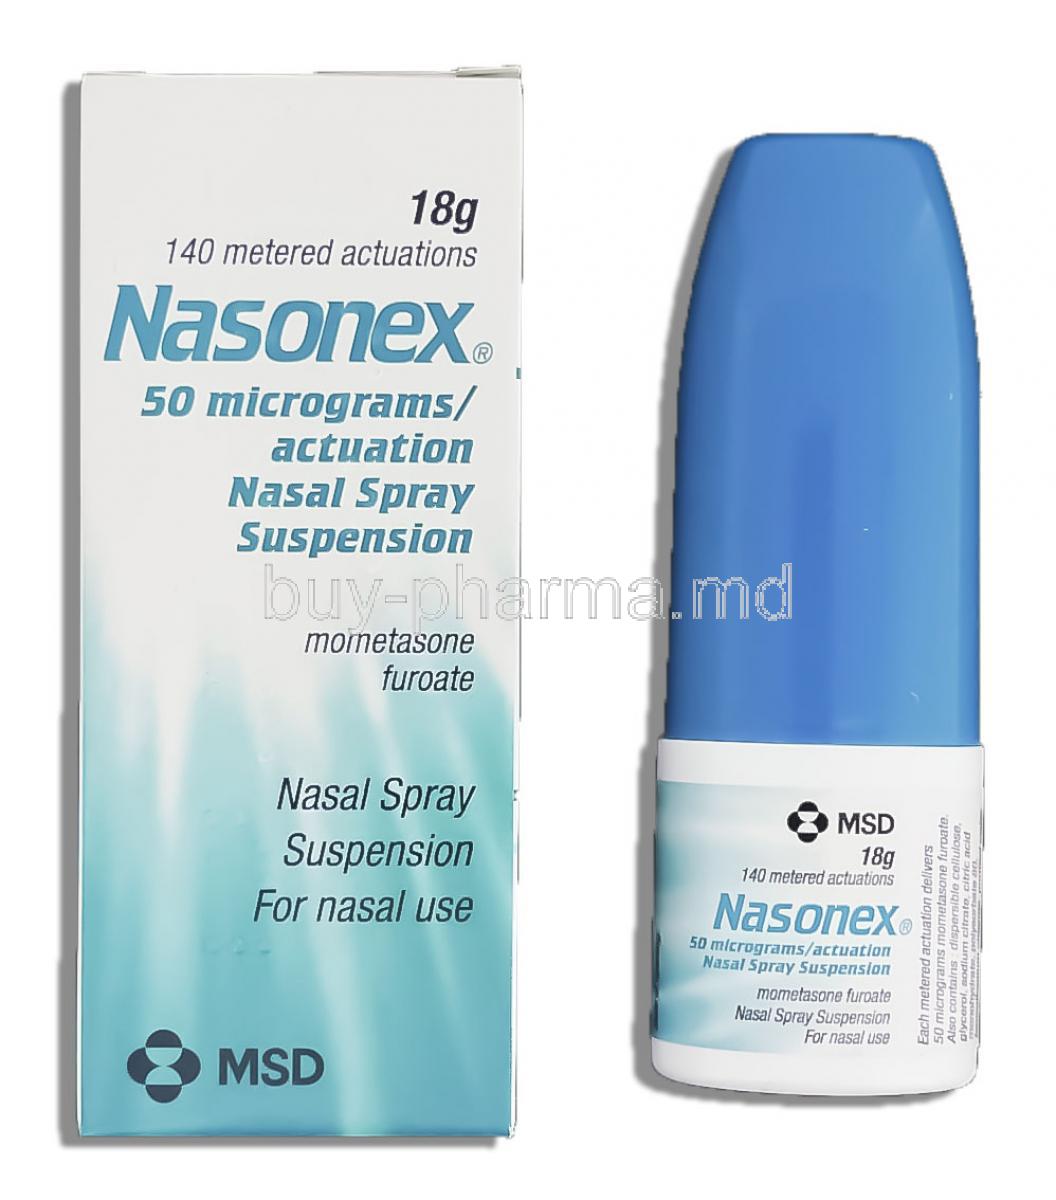 Nasonex